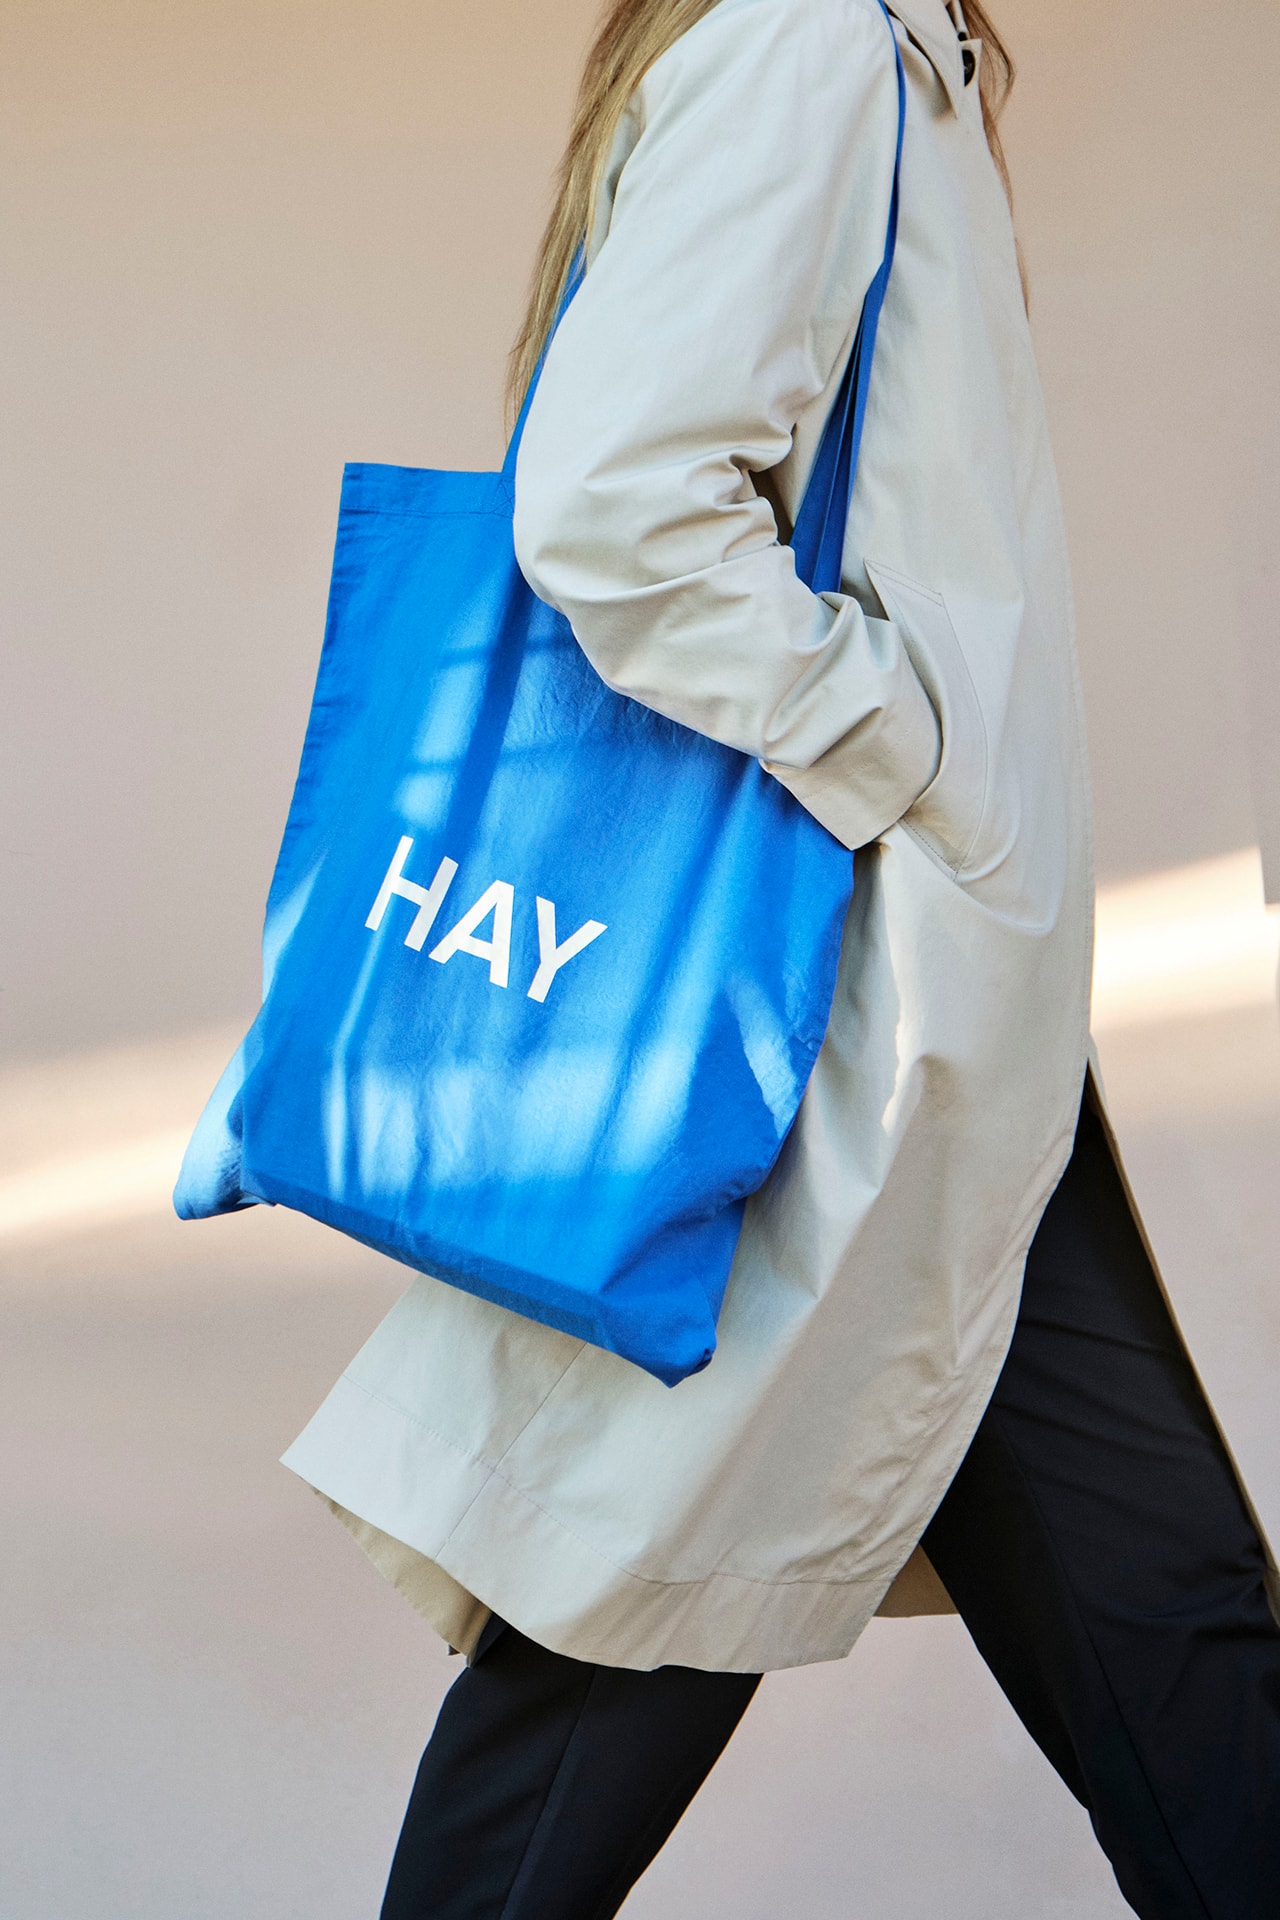 HAY Spring 2021 Home Decor Homeware Accessories Copenhagen Danish Scandinavian Design Blue Logo Tote Bag